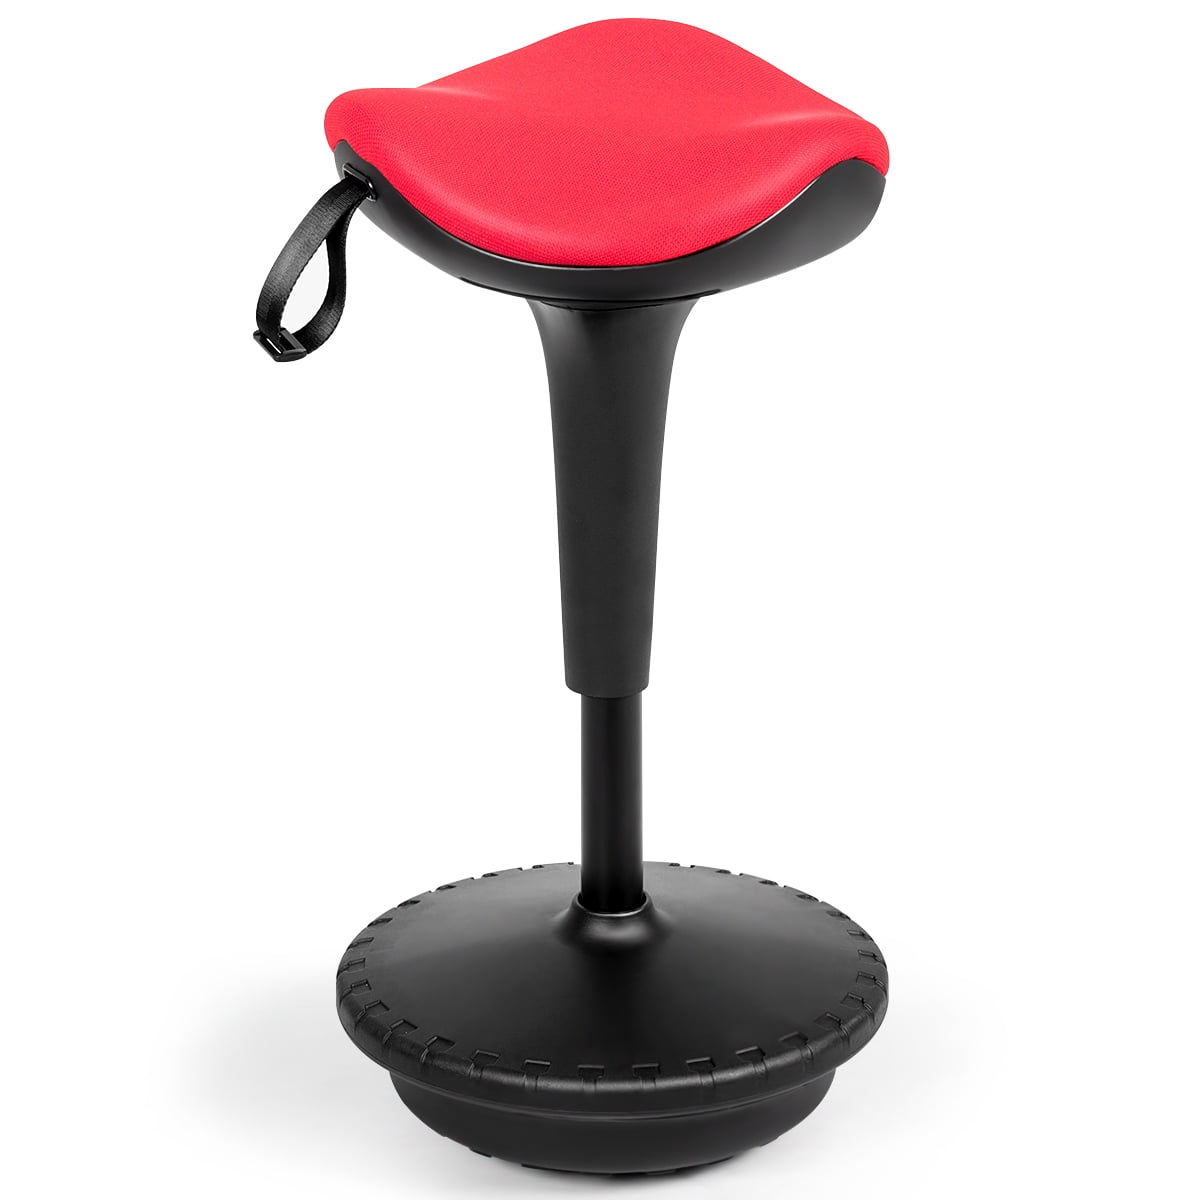 Wobble Stool Standing Desk Chair Height Adjustable Swivel Sitting Balance Chair 